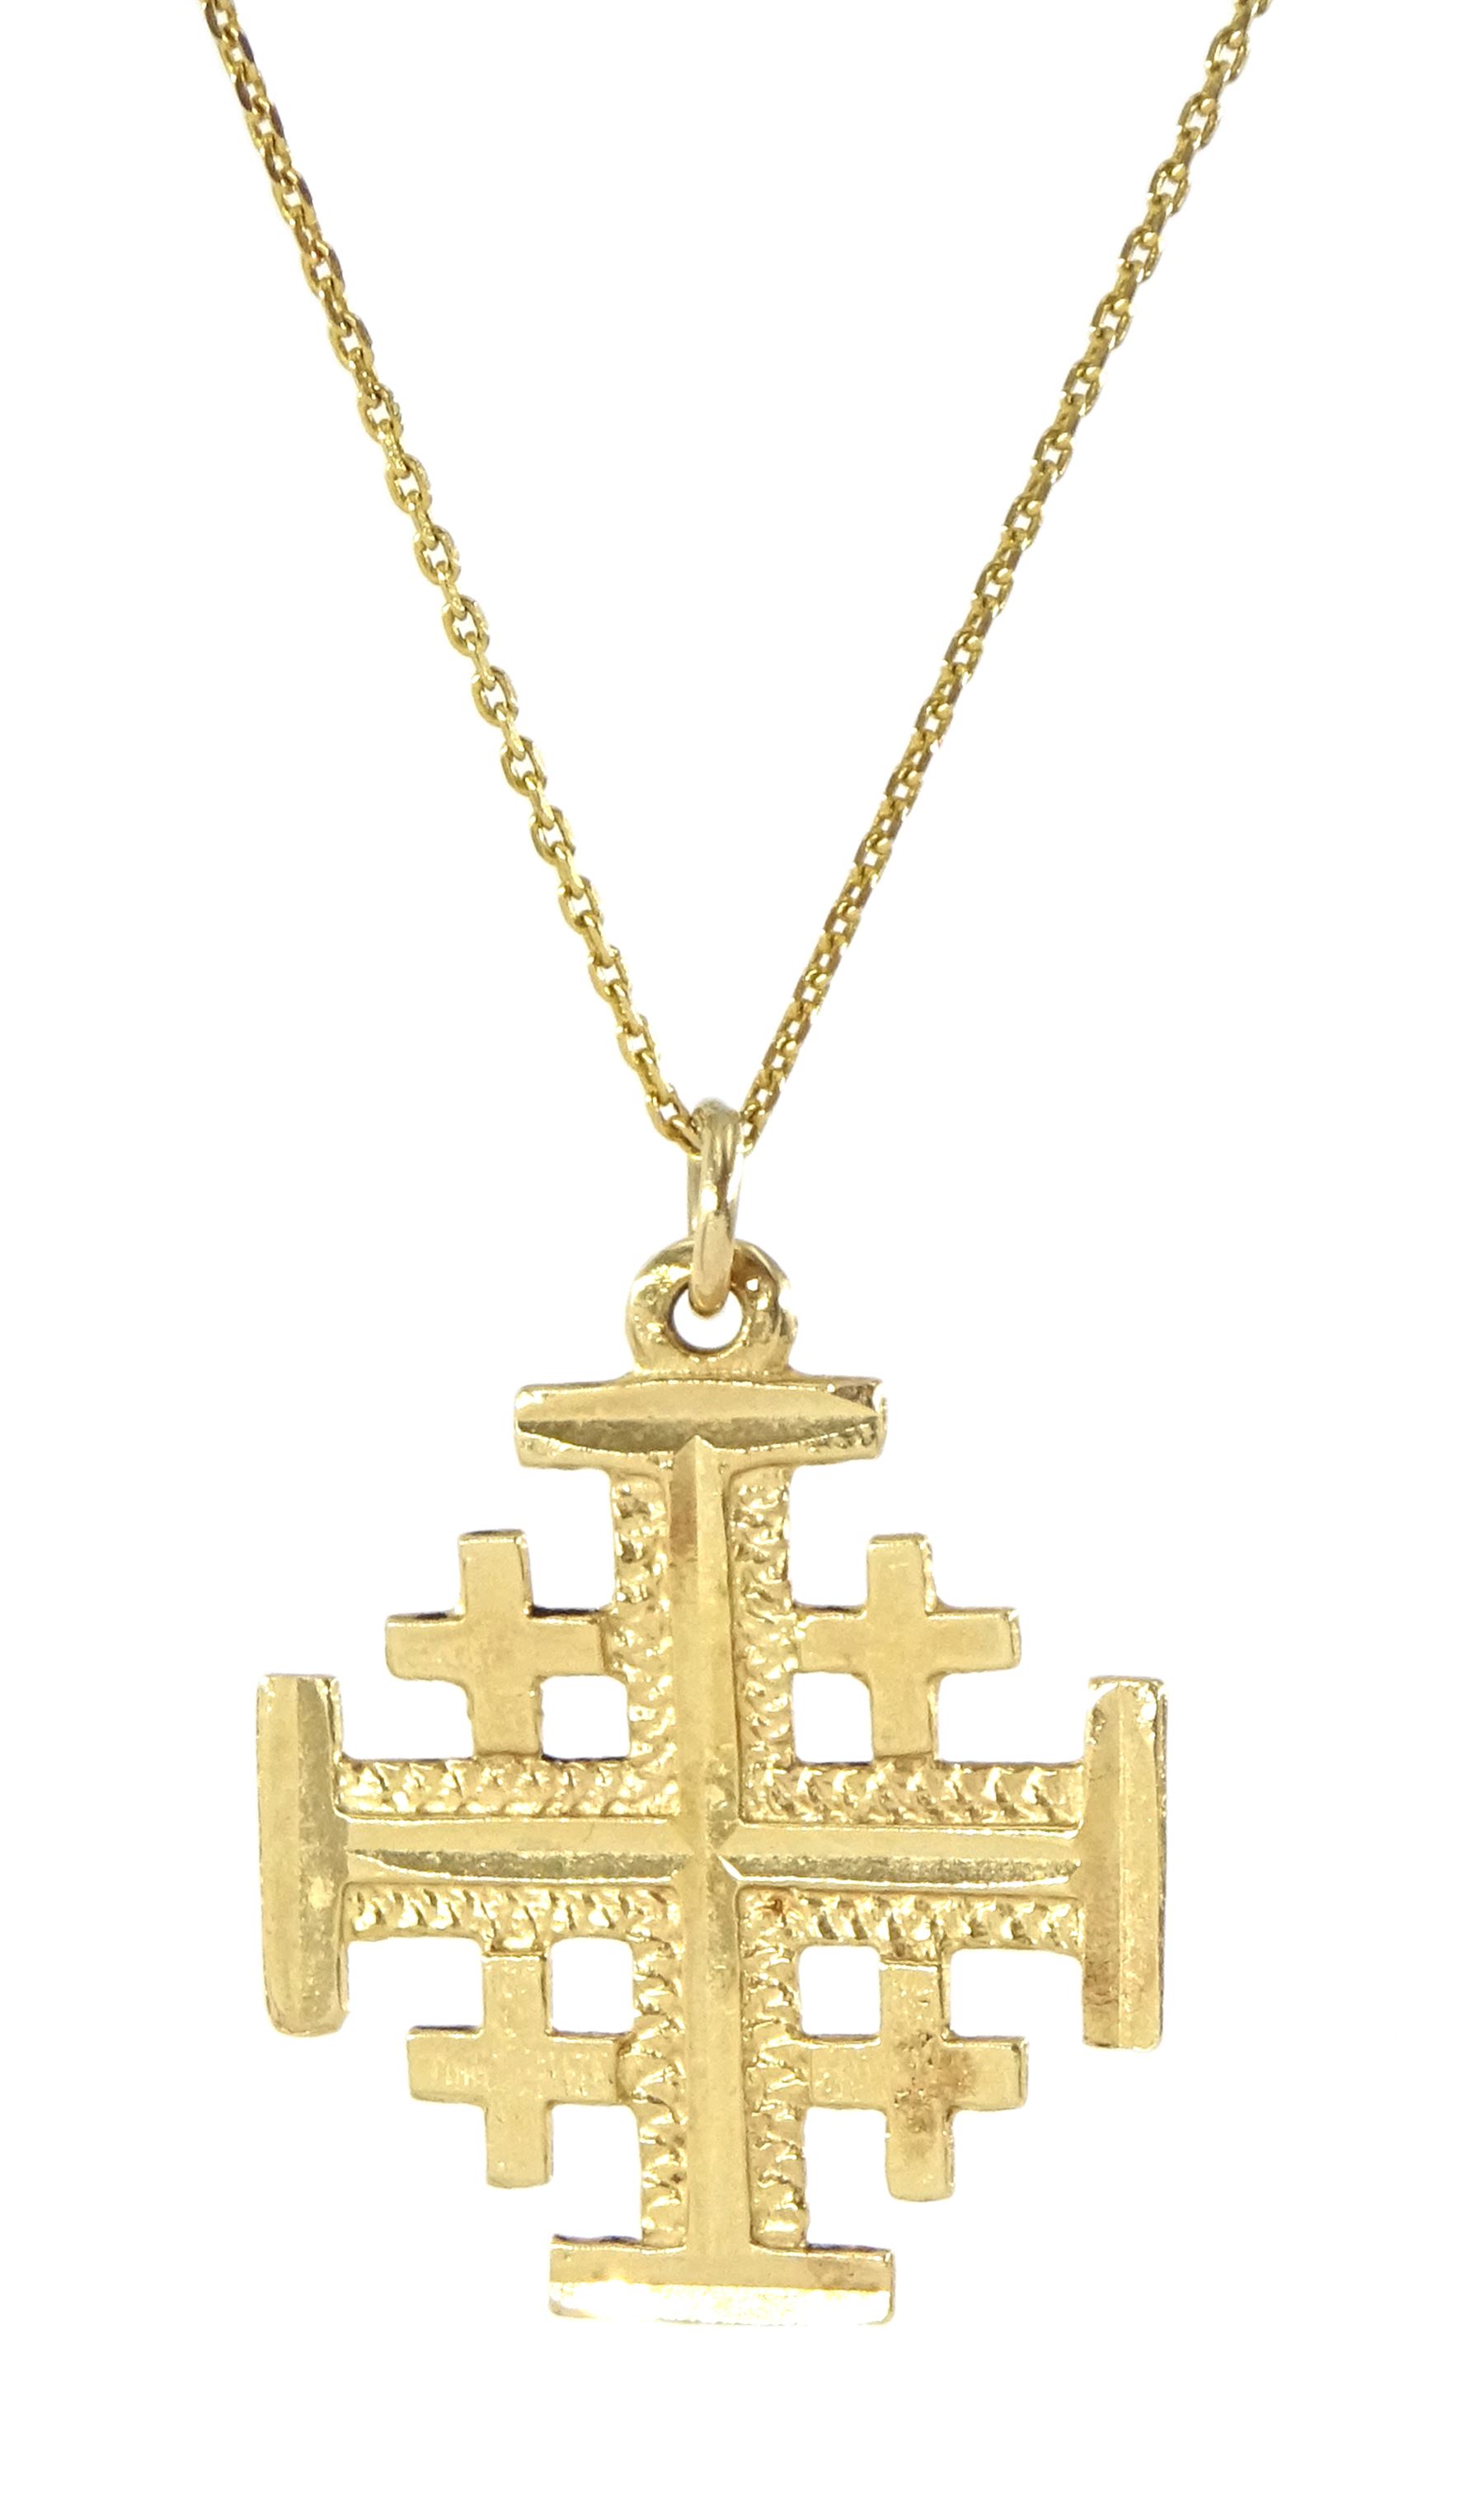 14ct gold Jerusalem cross pendant necklace